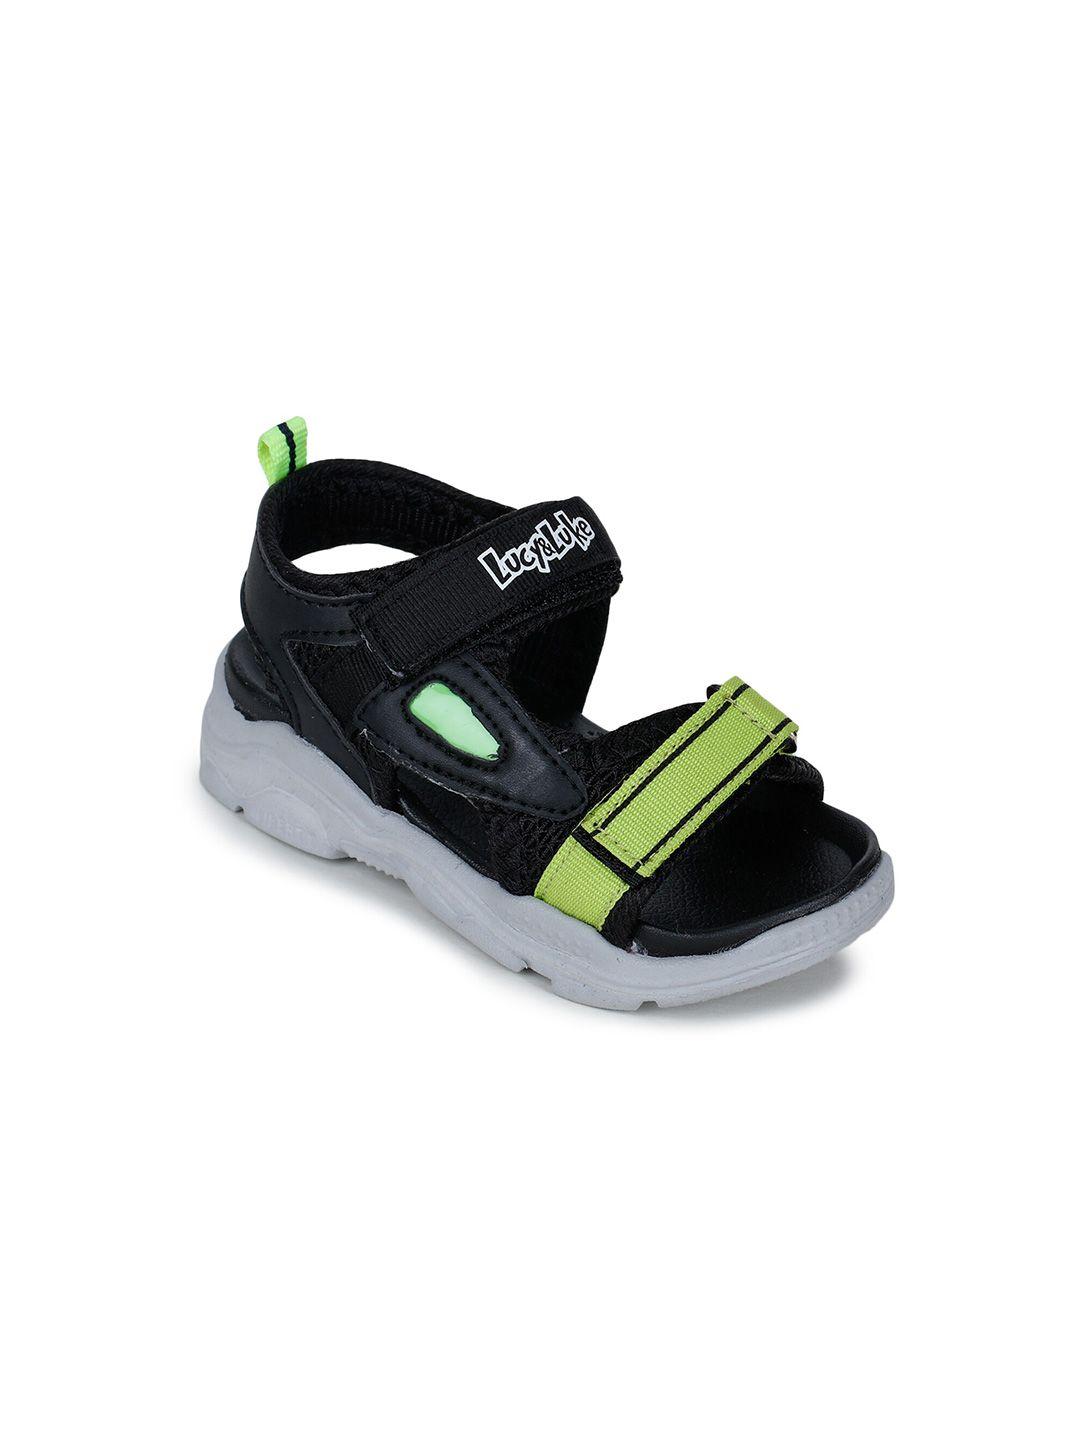 liberty unisex kids black & green comfort sandals